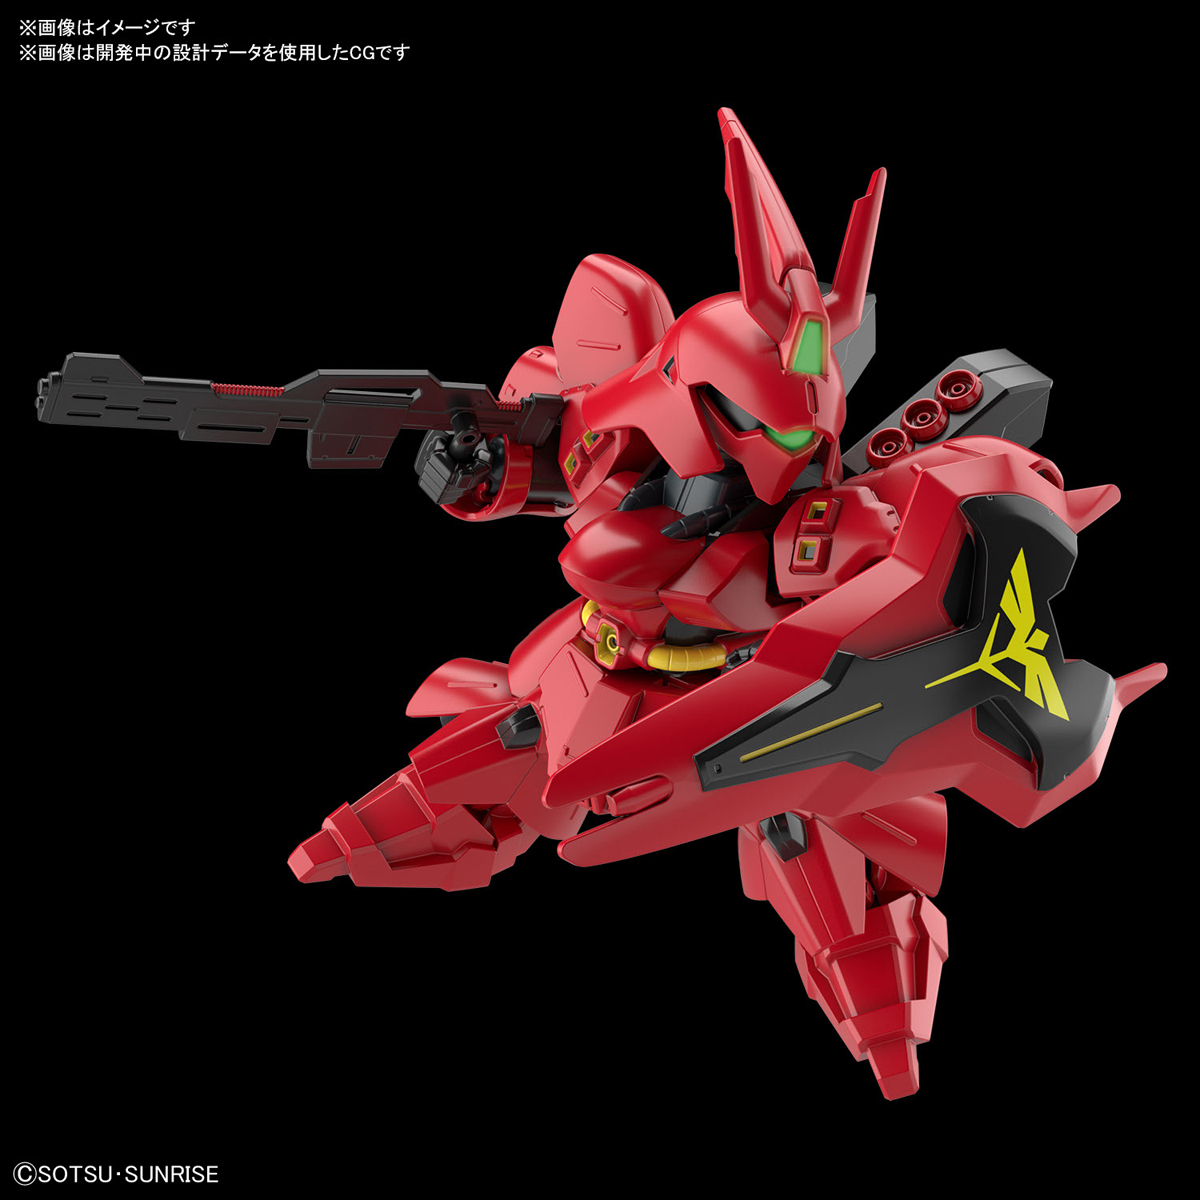 GUNDAM - SD Ex Standard - Sazabi Gundam